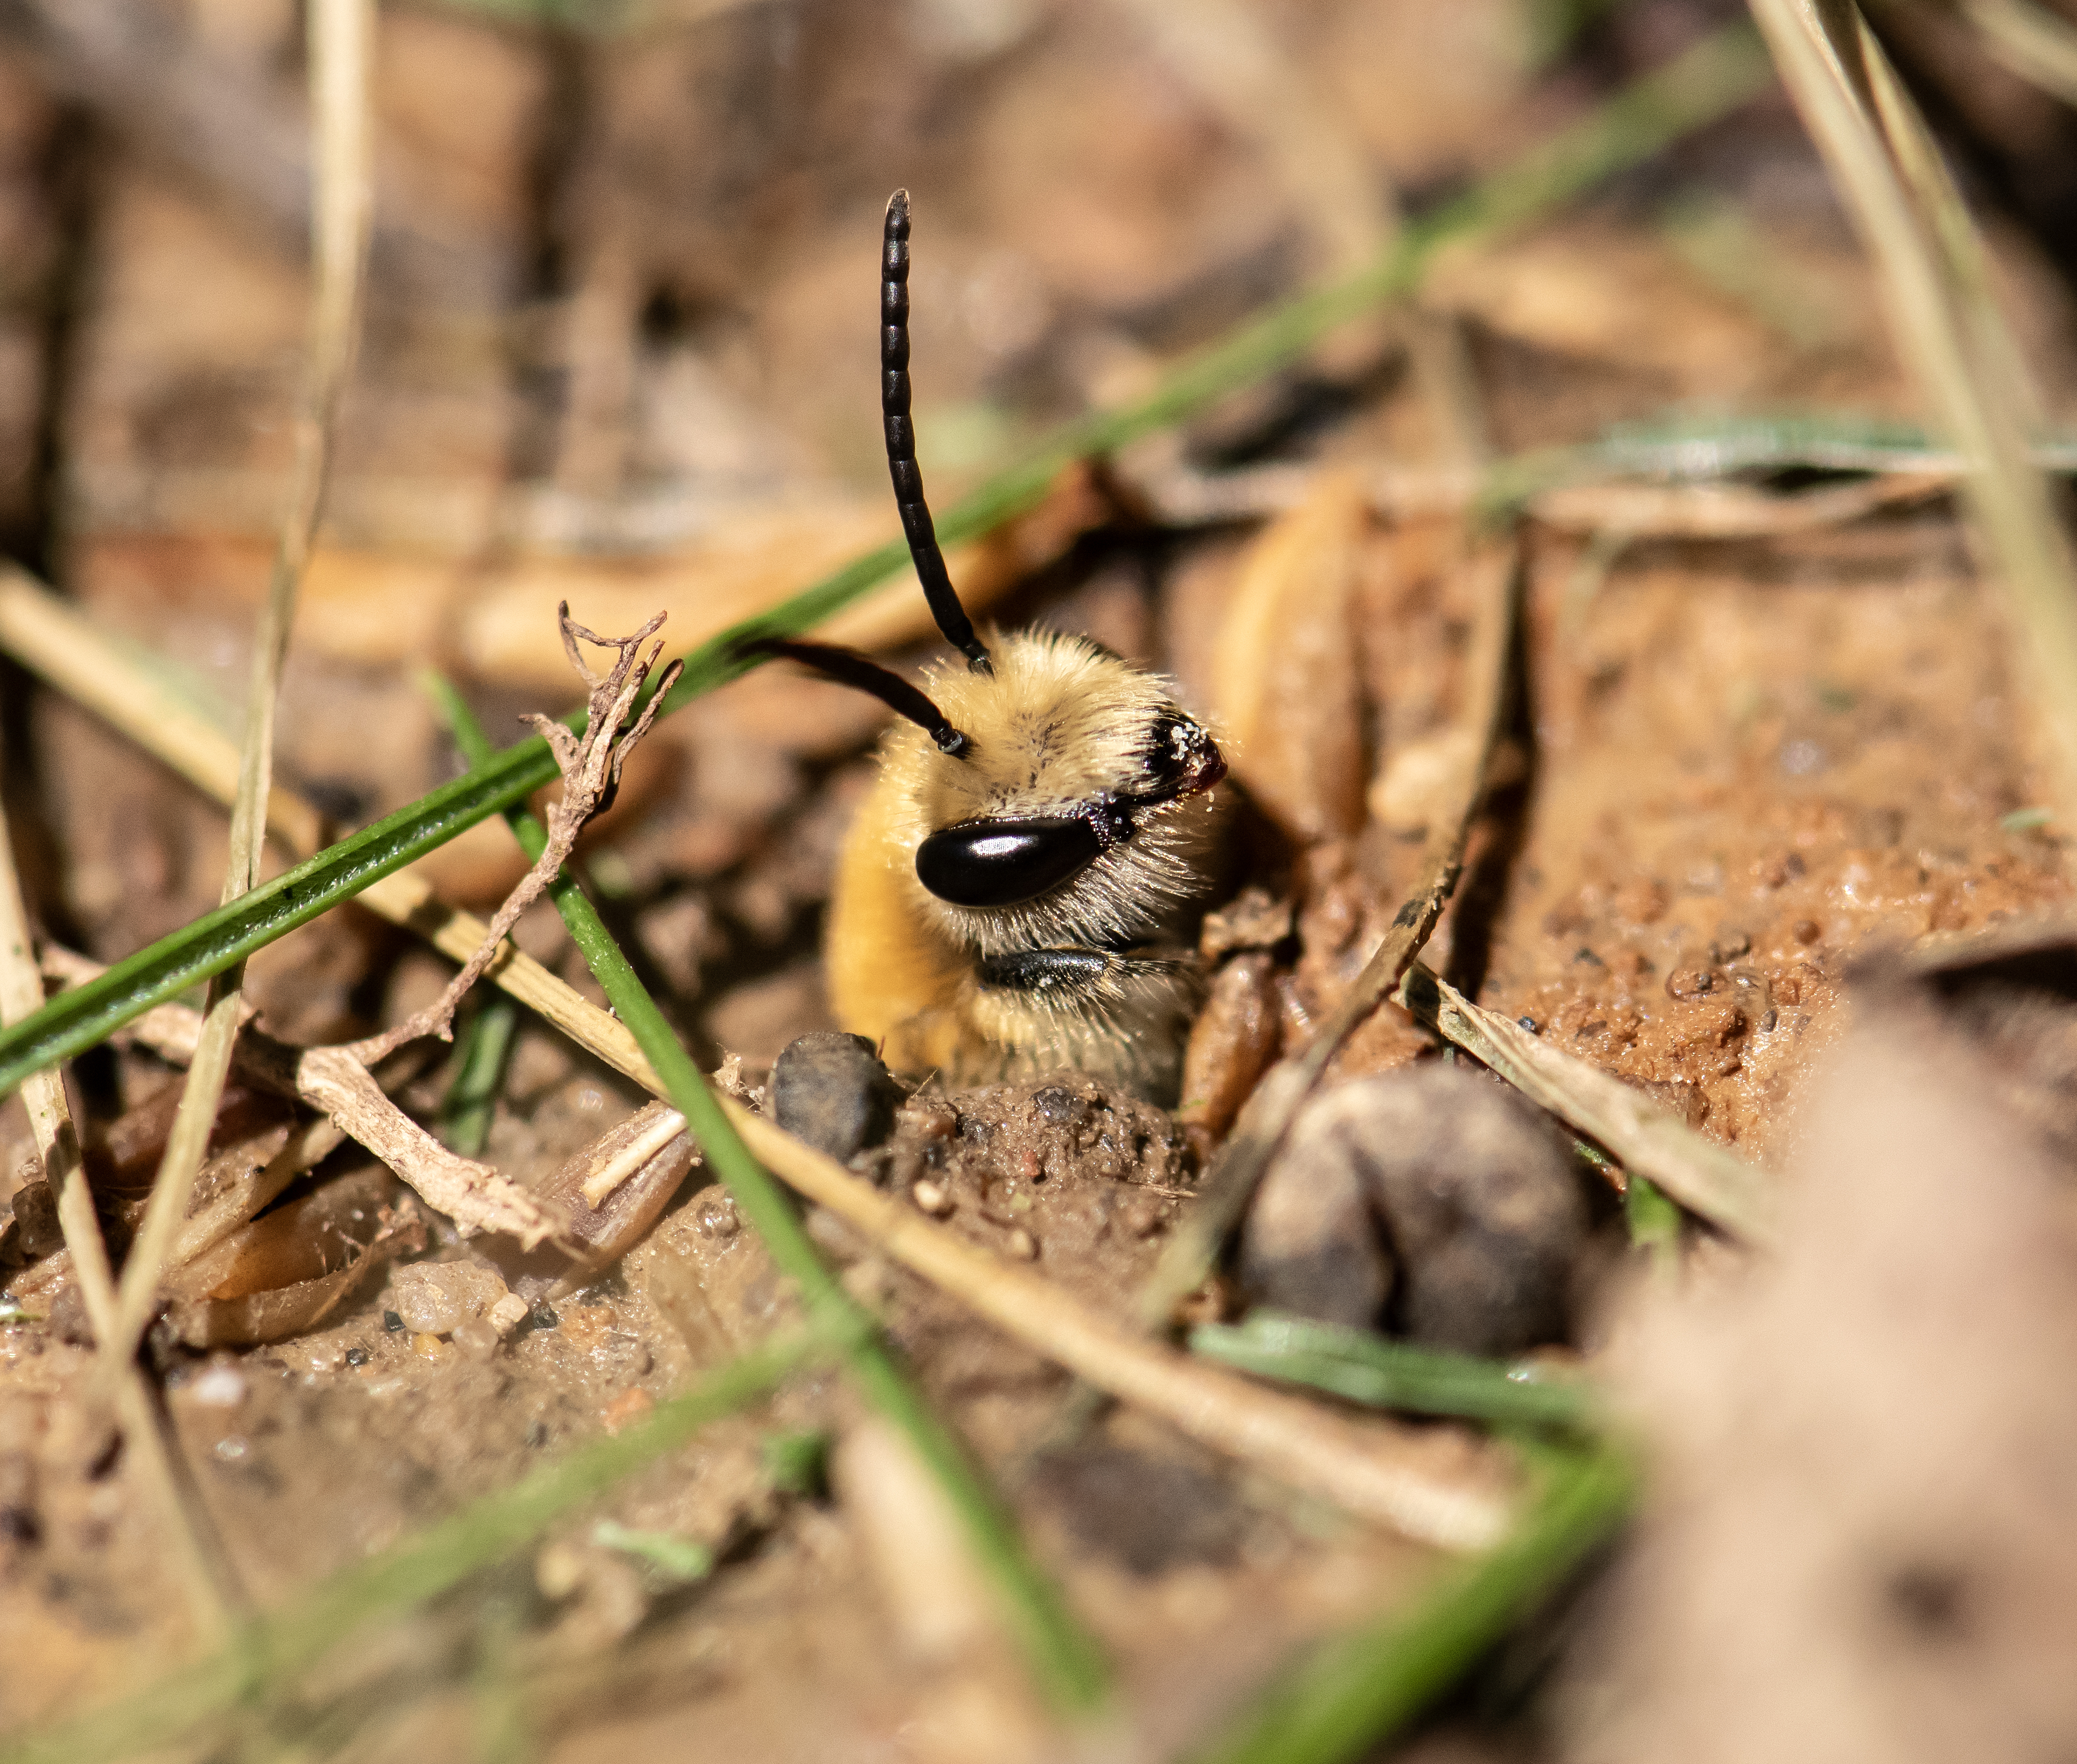 Native Andrena mining bee standing watch near her nest. 